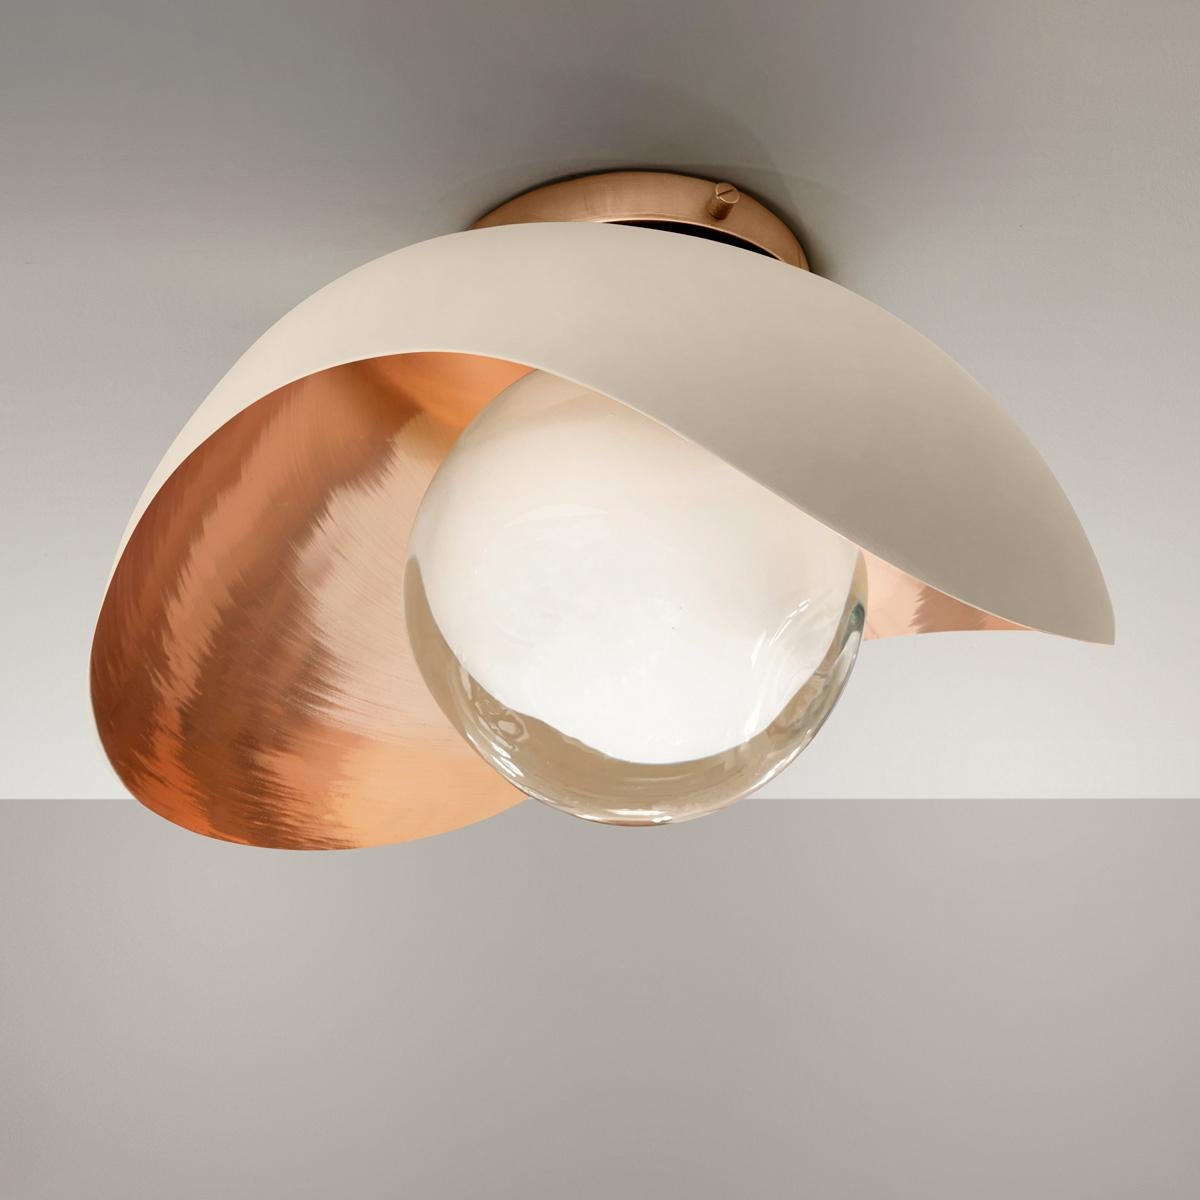 Perla Flushmount Ceiling Light by Gaspare Asaro-Satin Brass/Acqua Finish For Sale 6